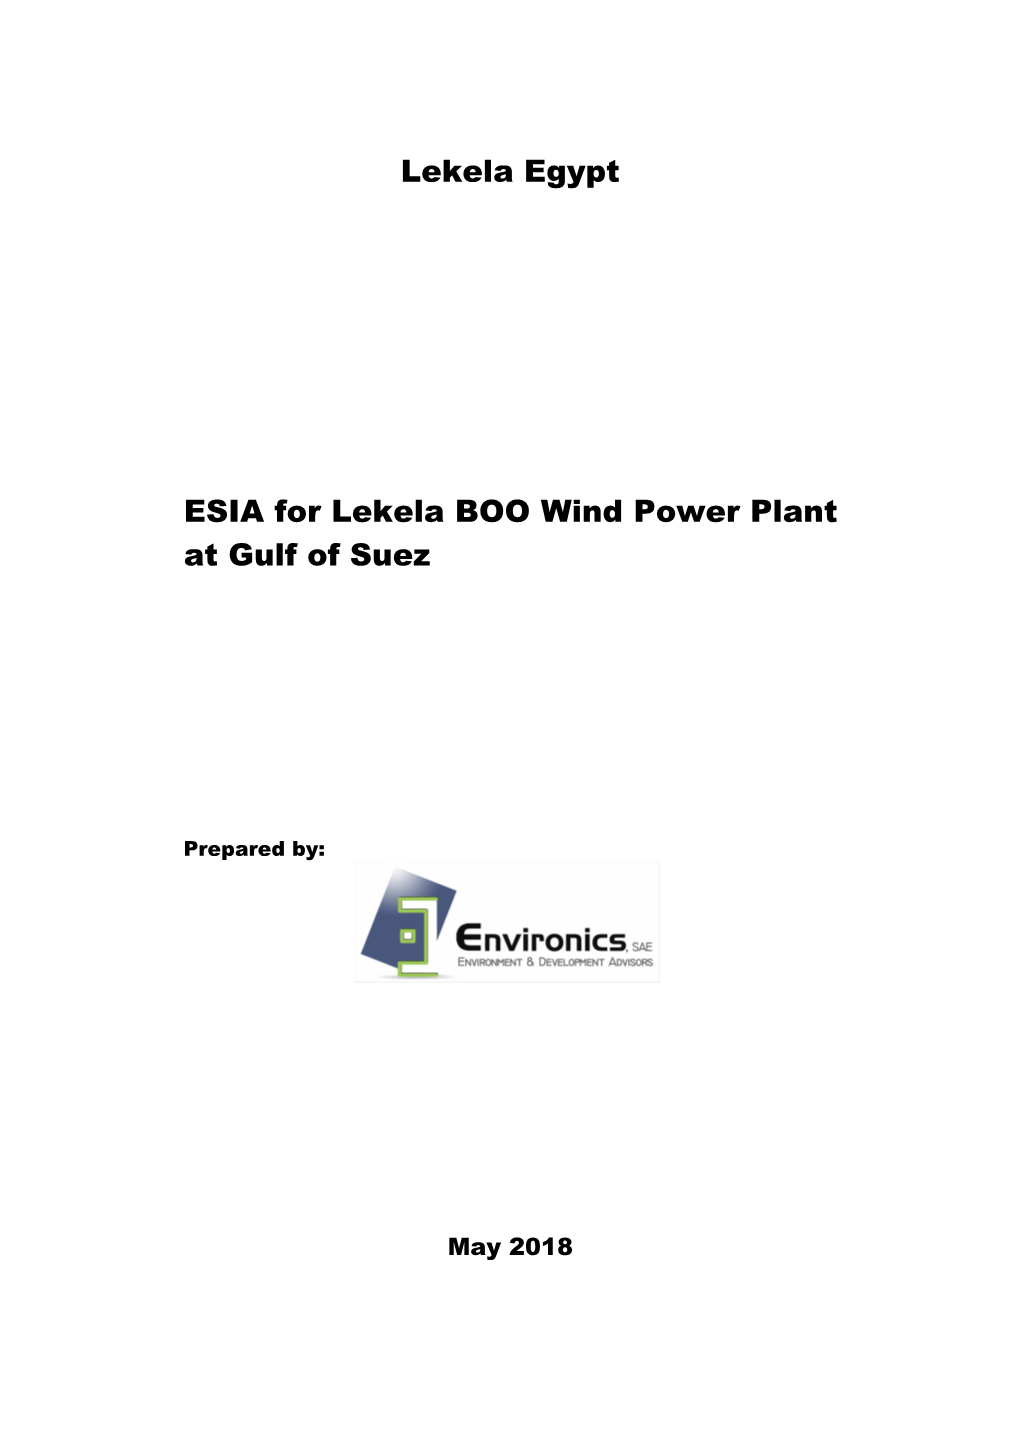 ESIA for Lekela BOO Wind Power Plant at Gulf of Suez